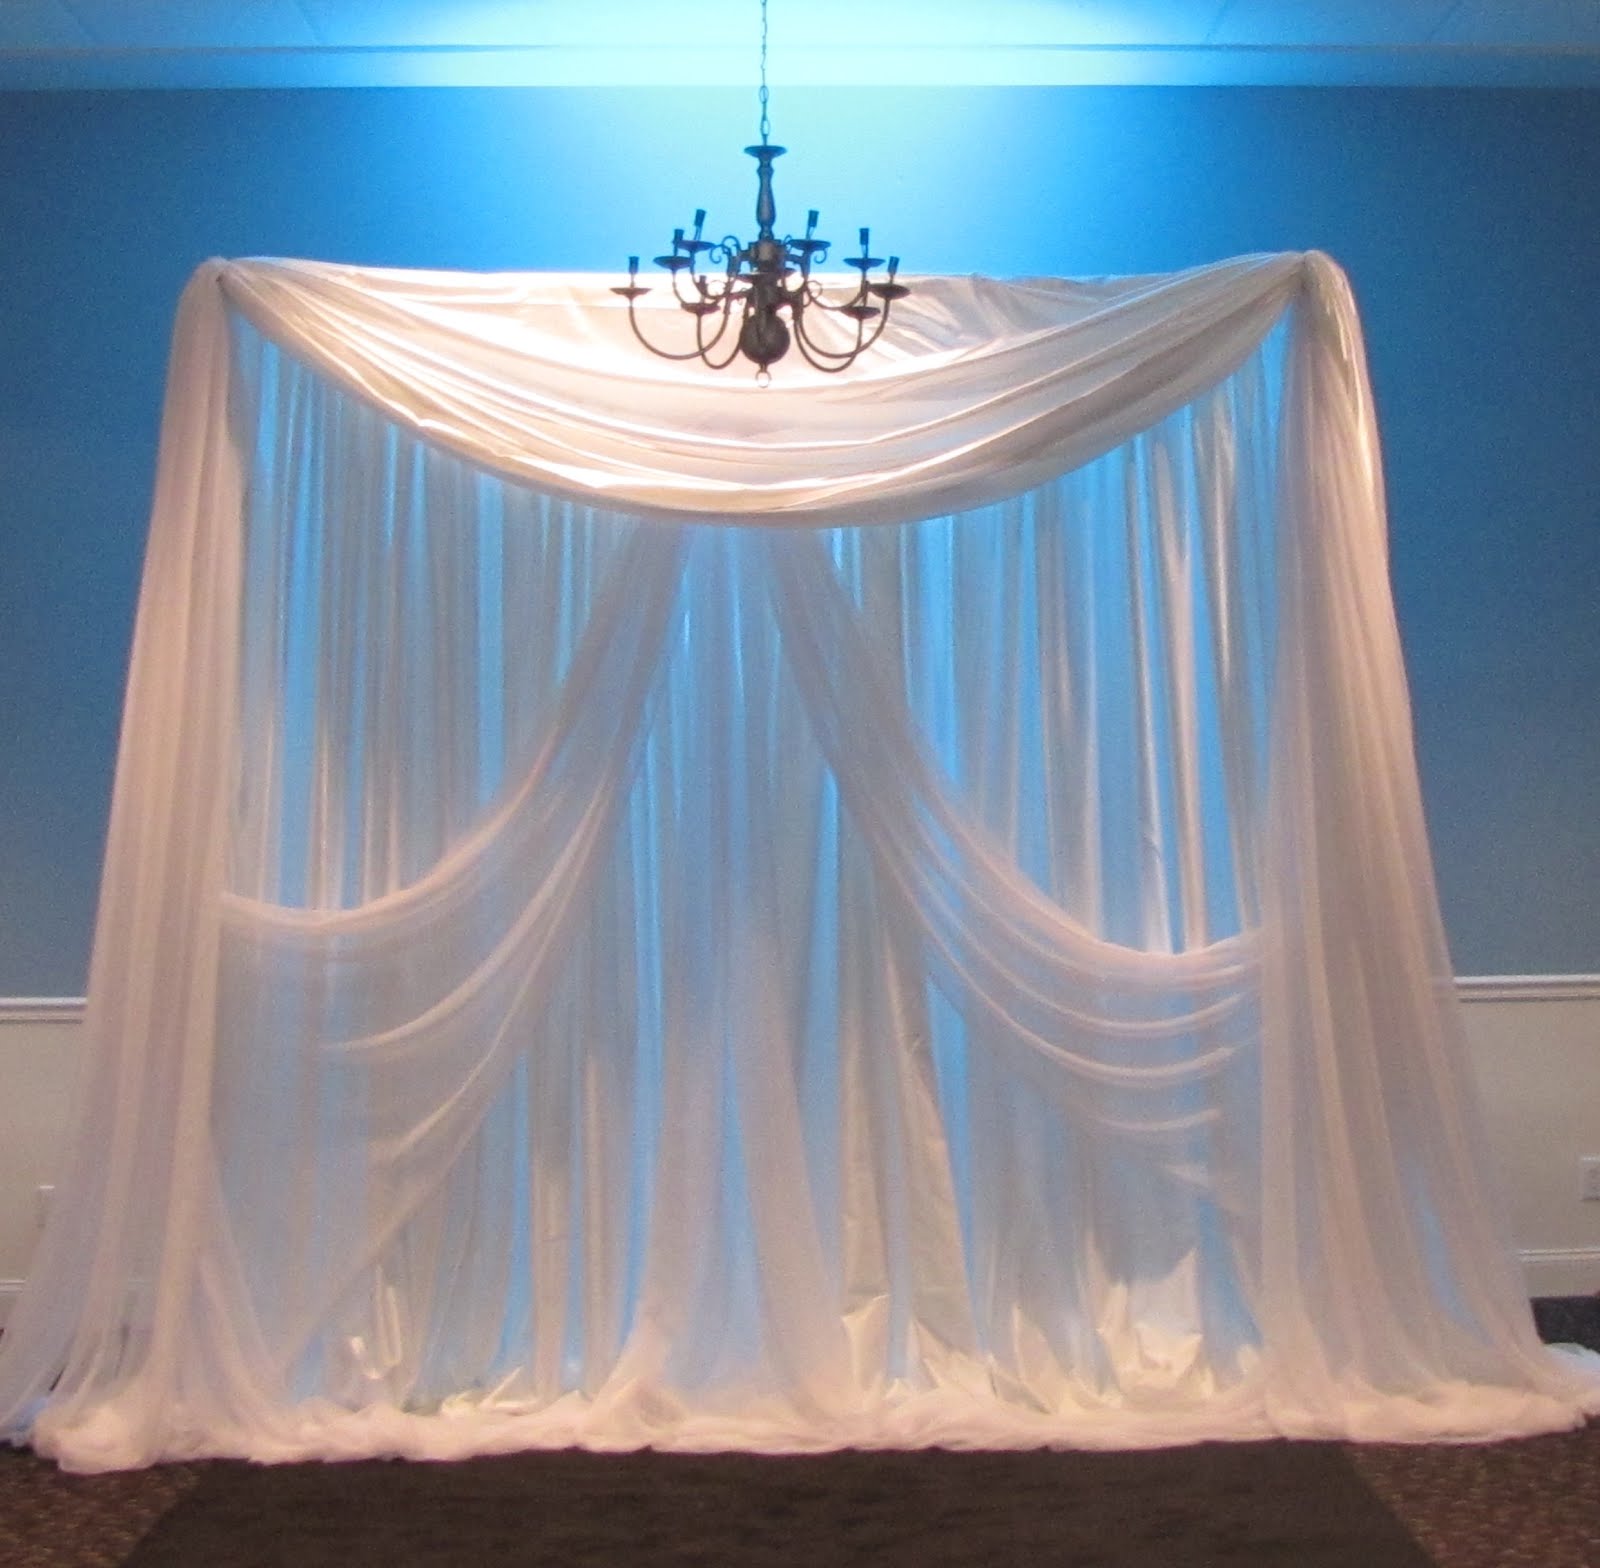 The Best Wedding Backdrop Ideas - Design Talk